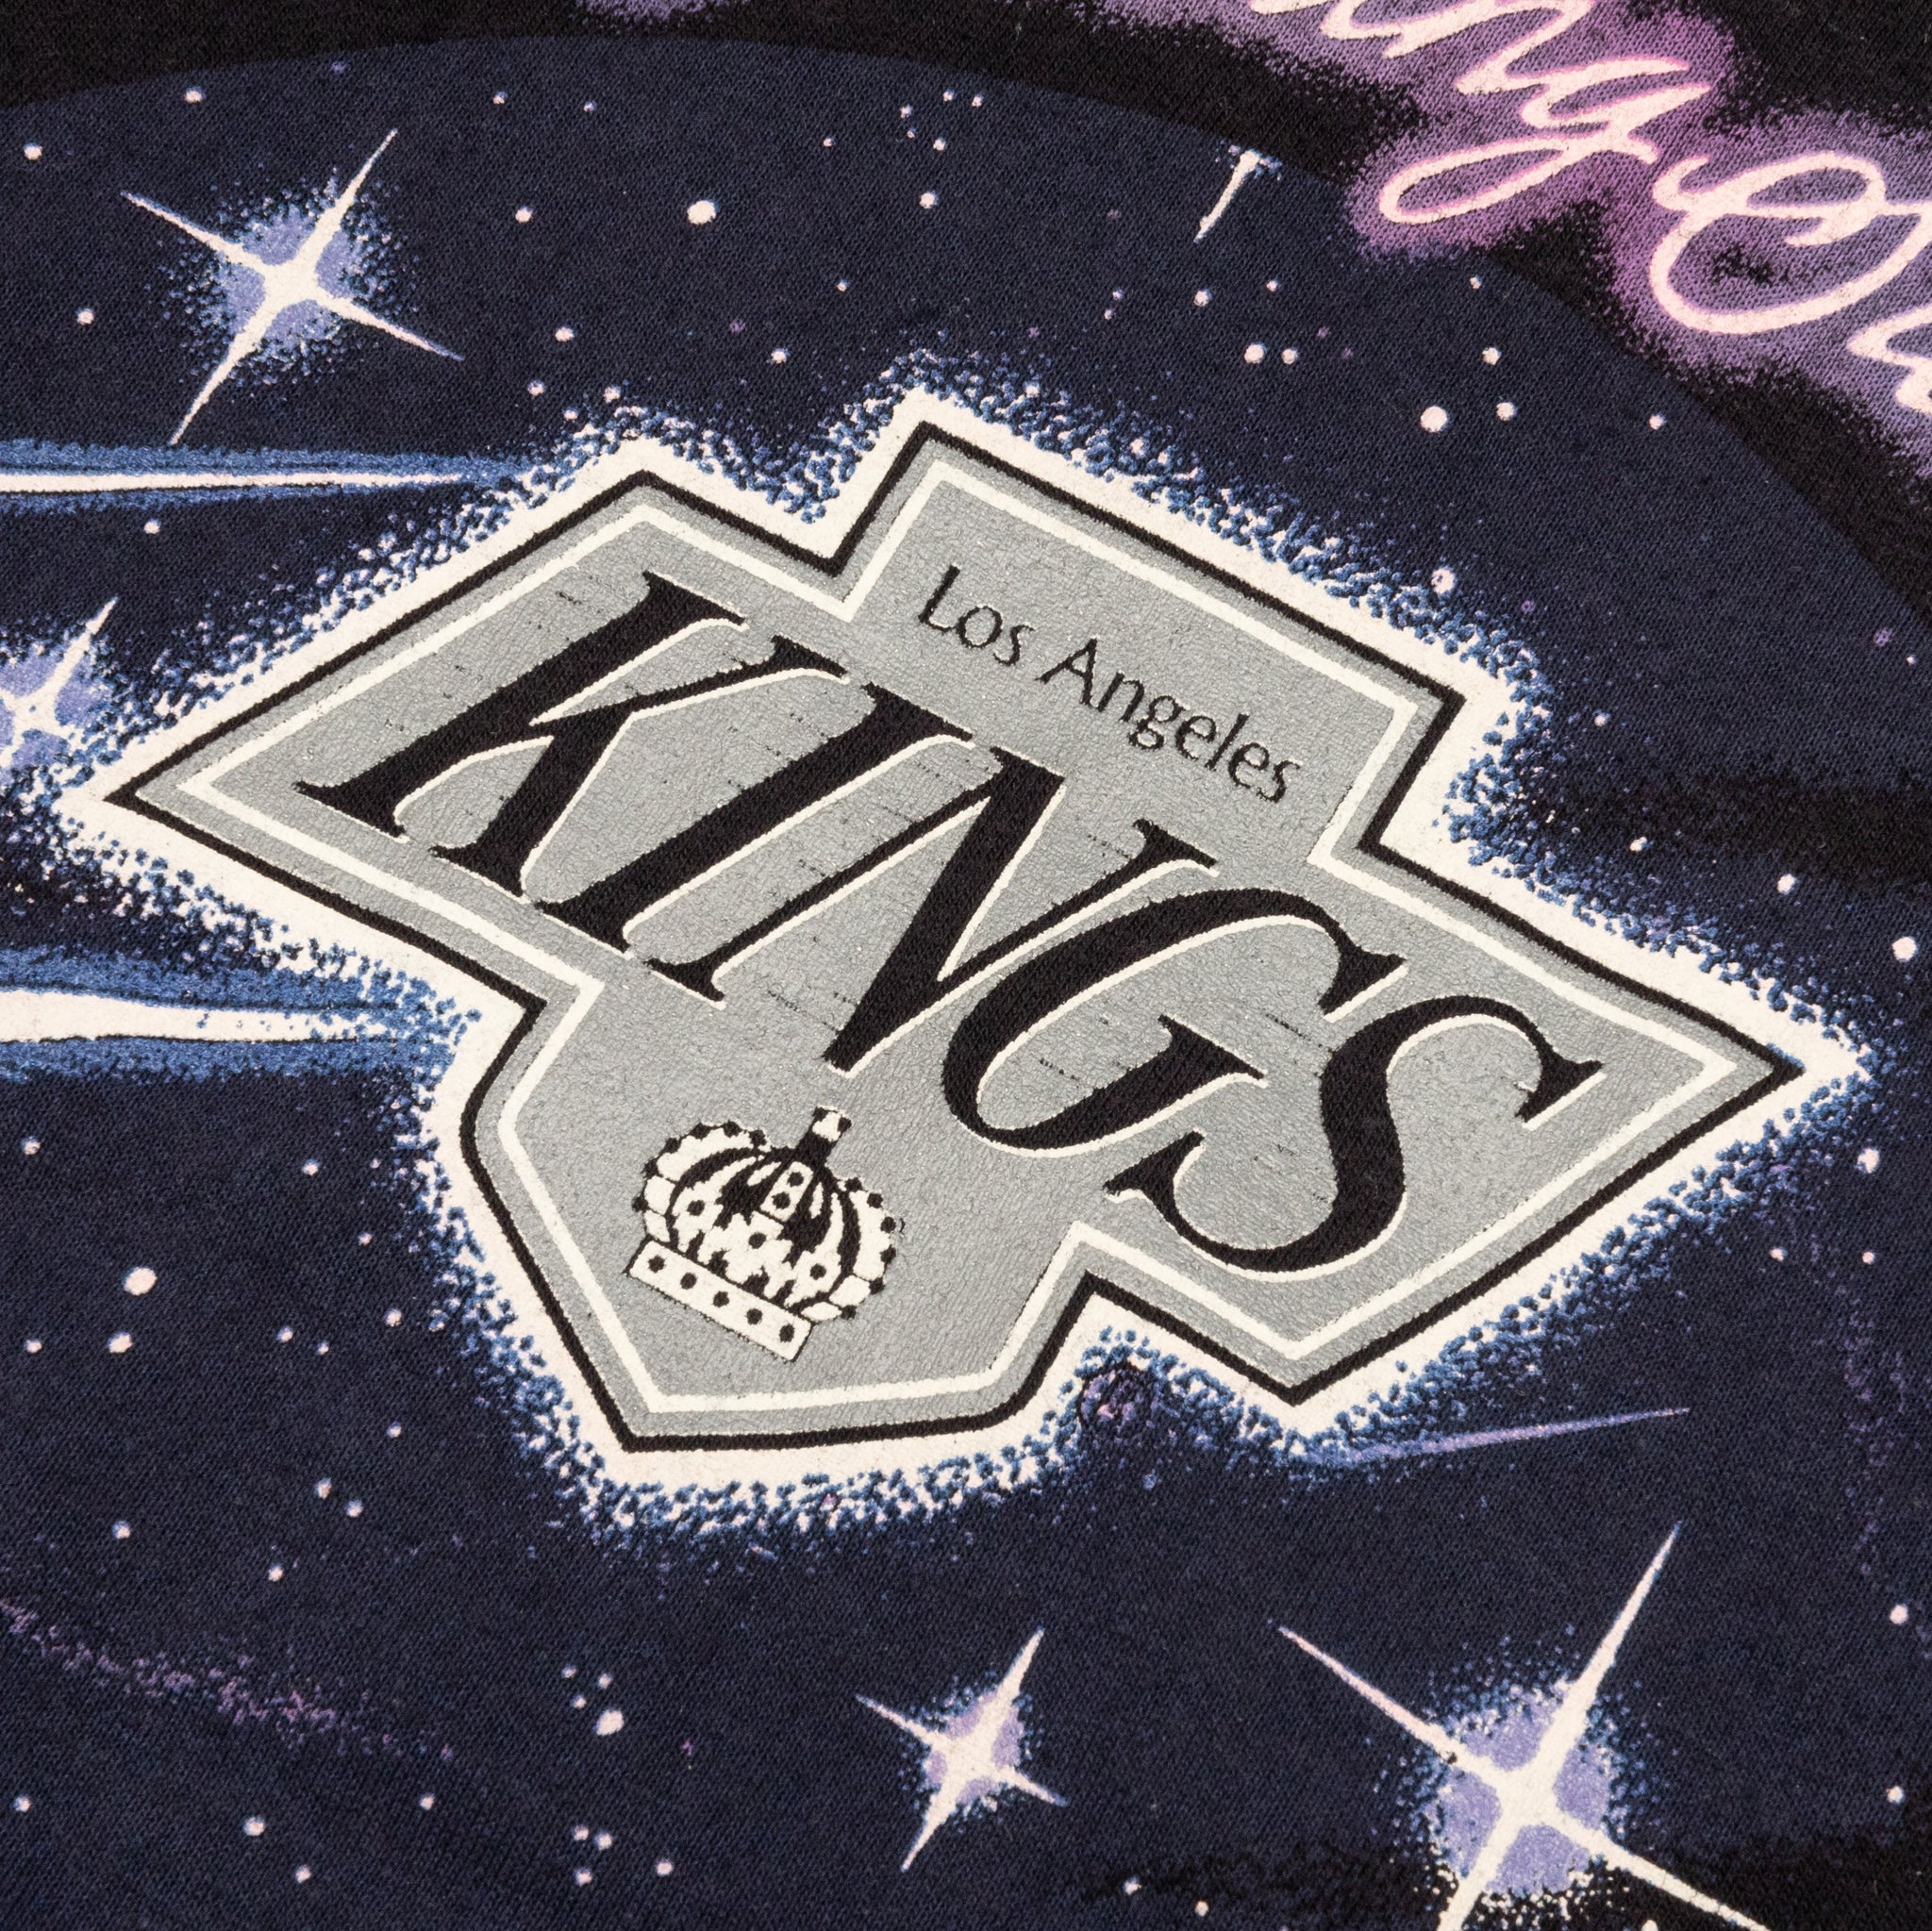 1990 LA Kings Shooting Stars